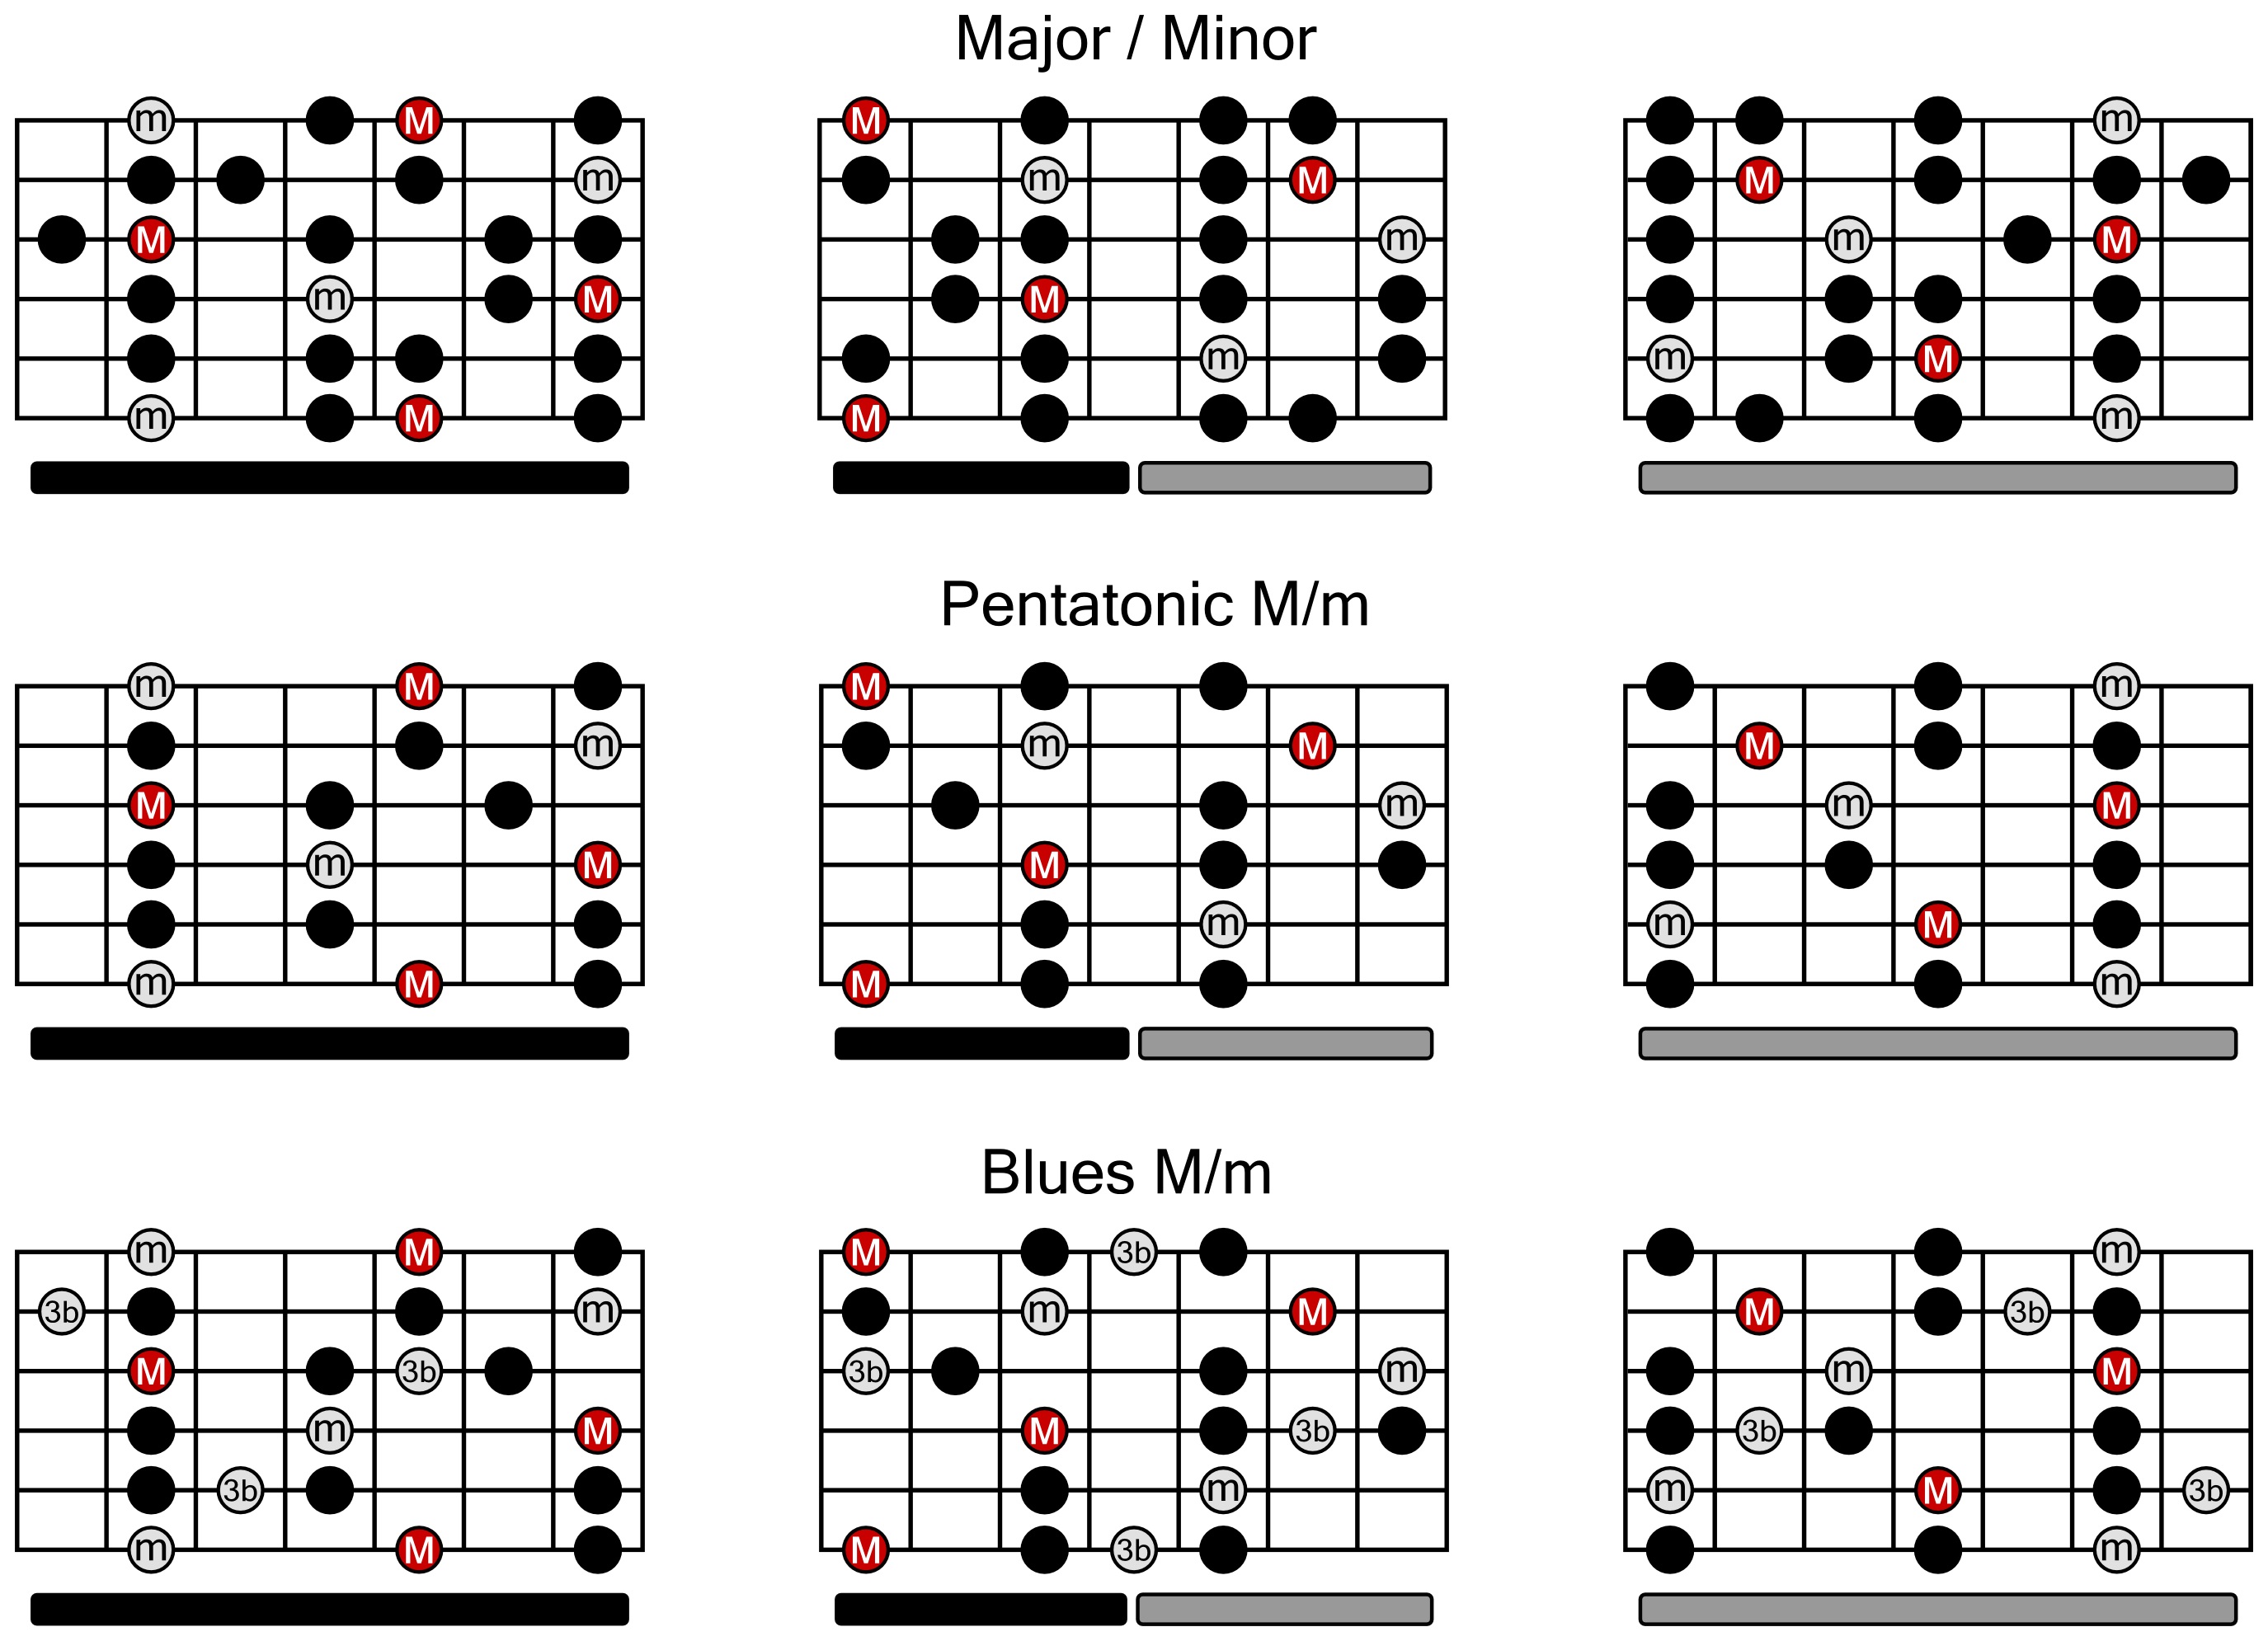 Free Guitar Scales Chart Printable Free Printable Templates